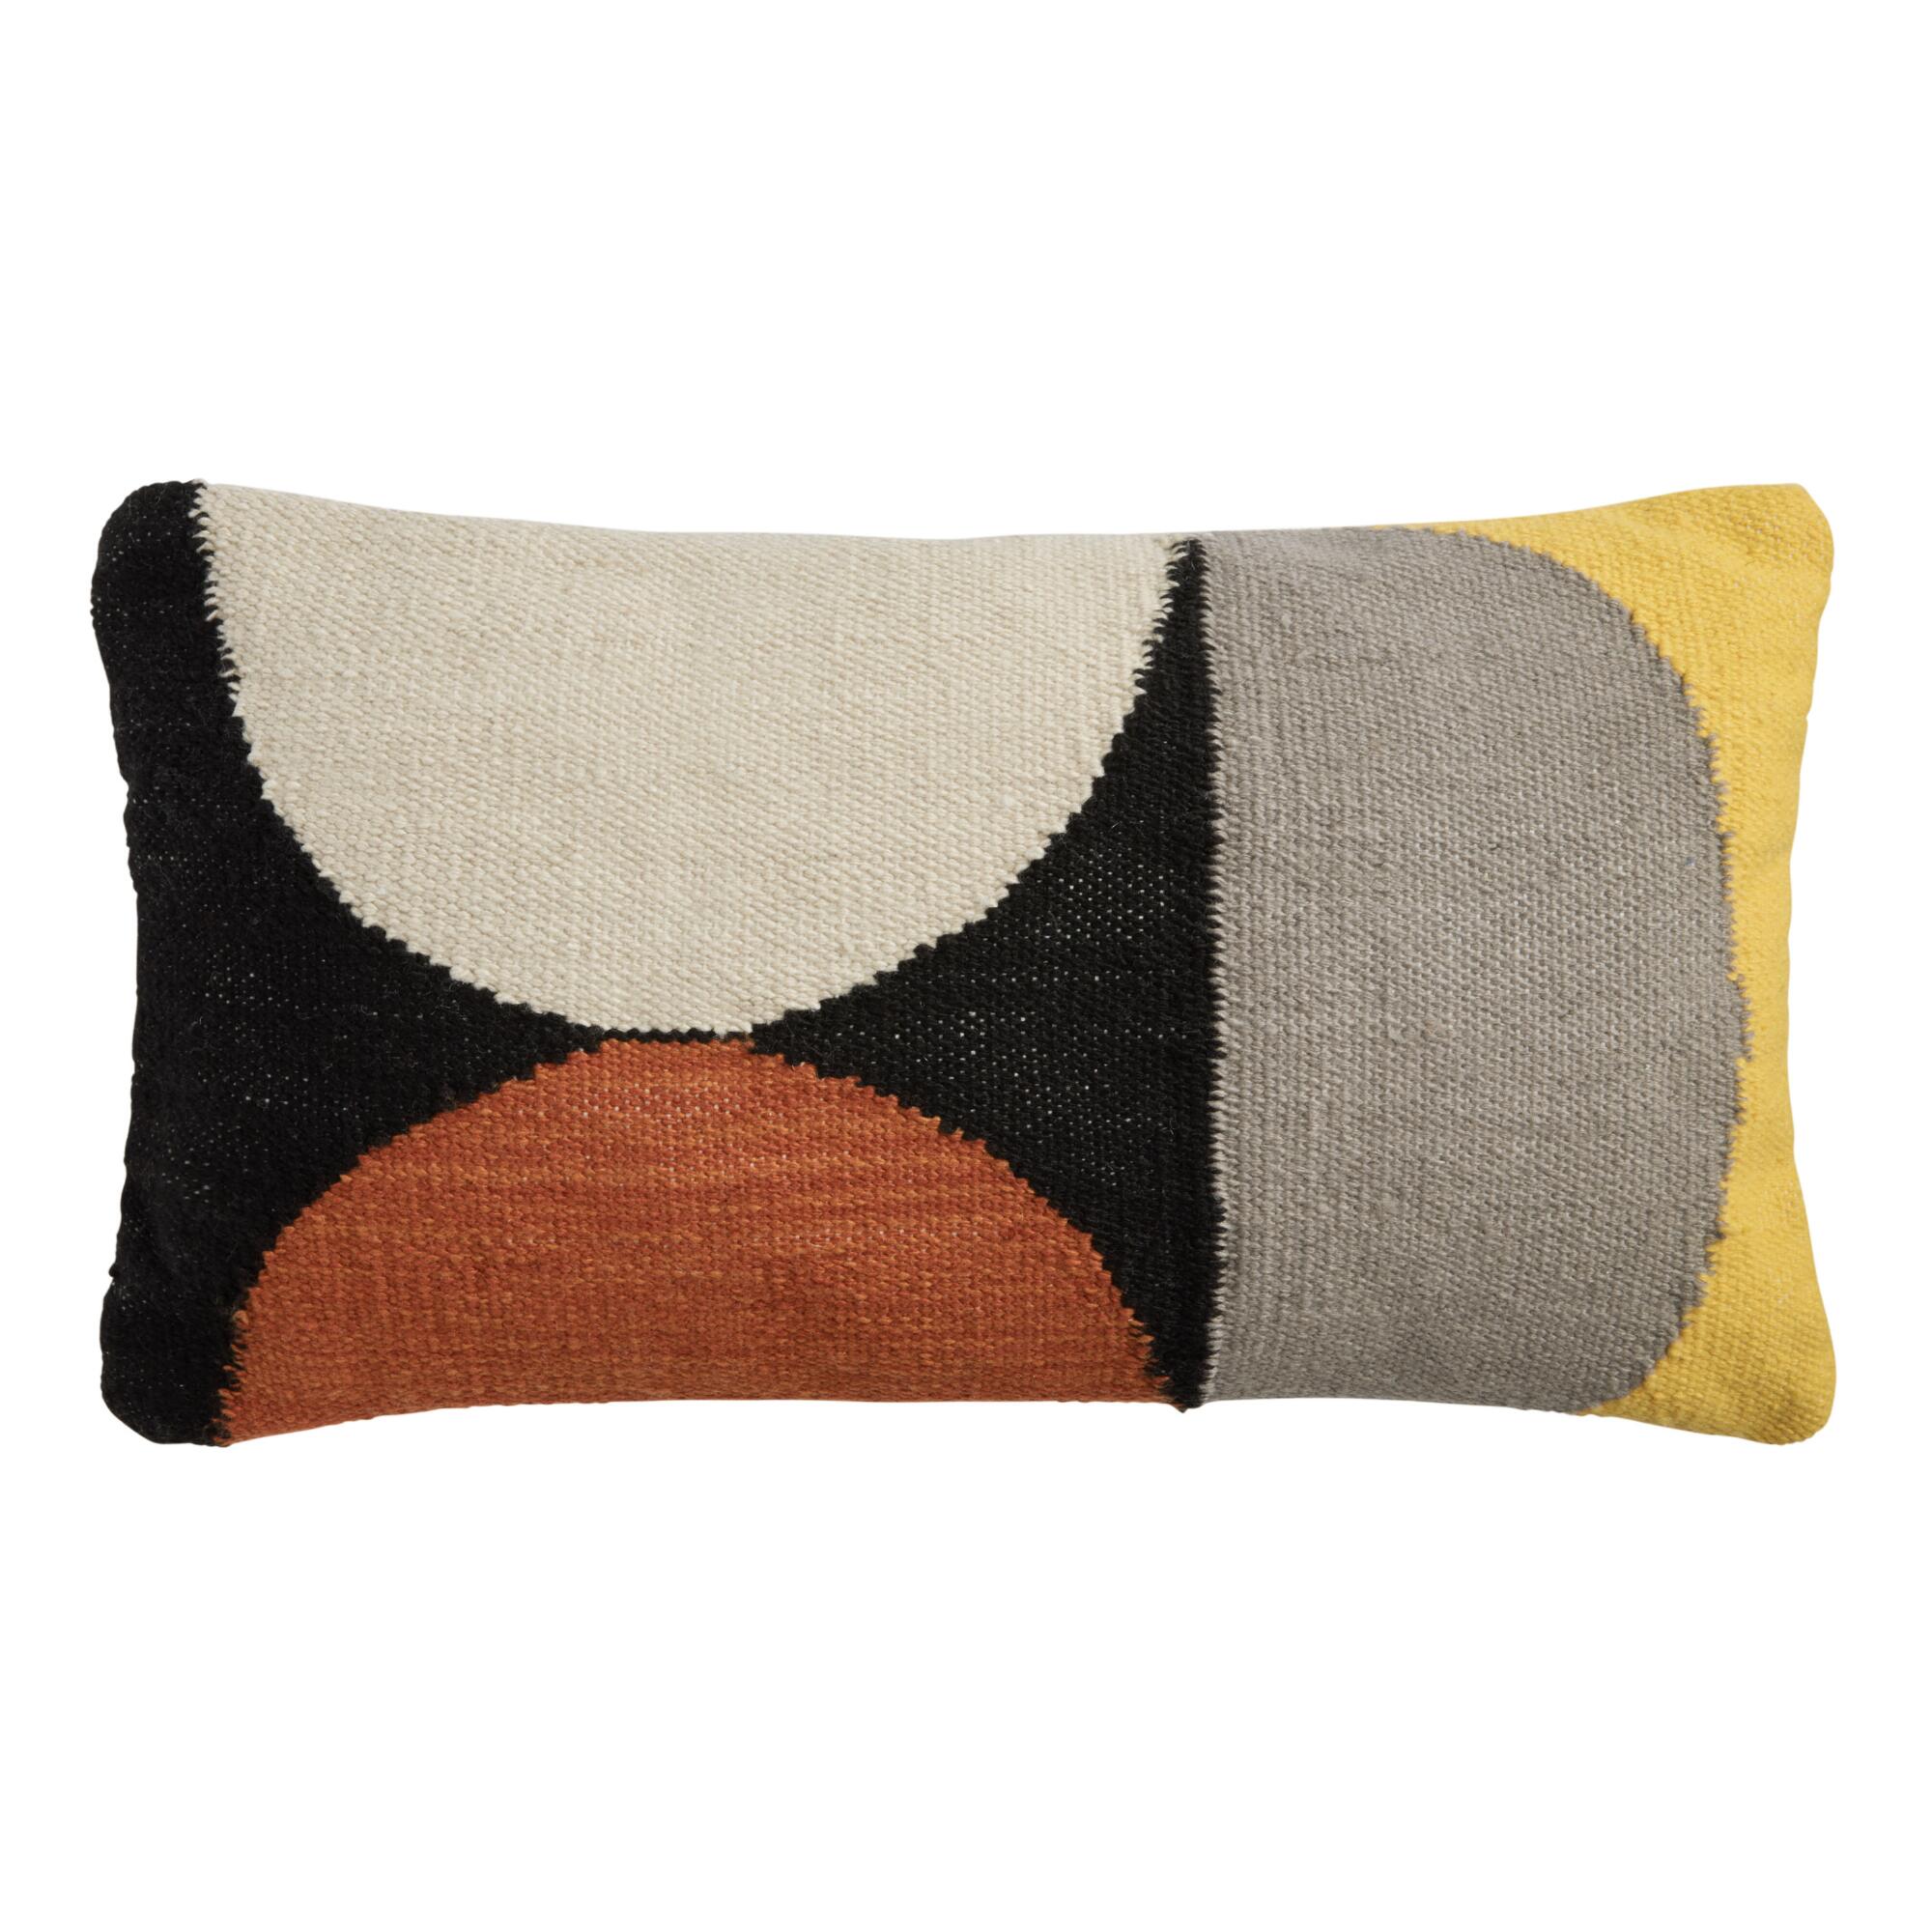 Woven Circles Indoor Outdoor Patio Lumbar Pillow by World Market